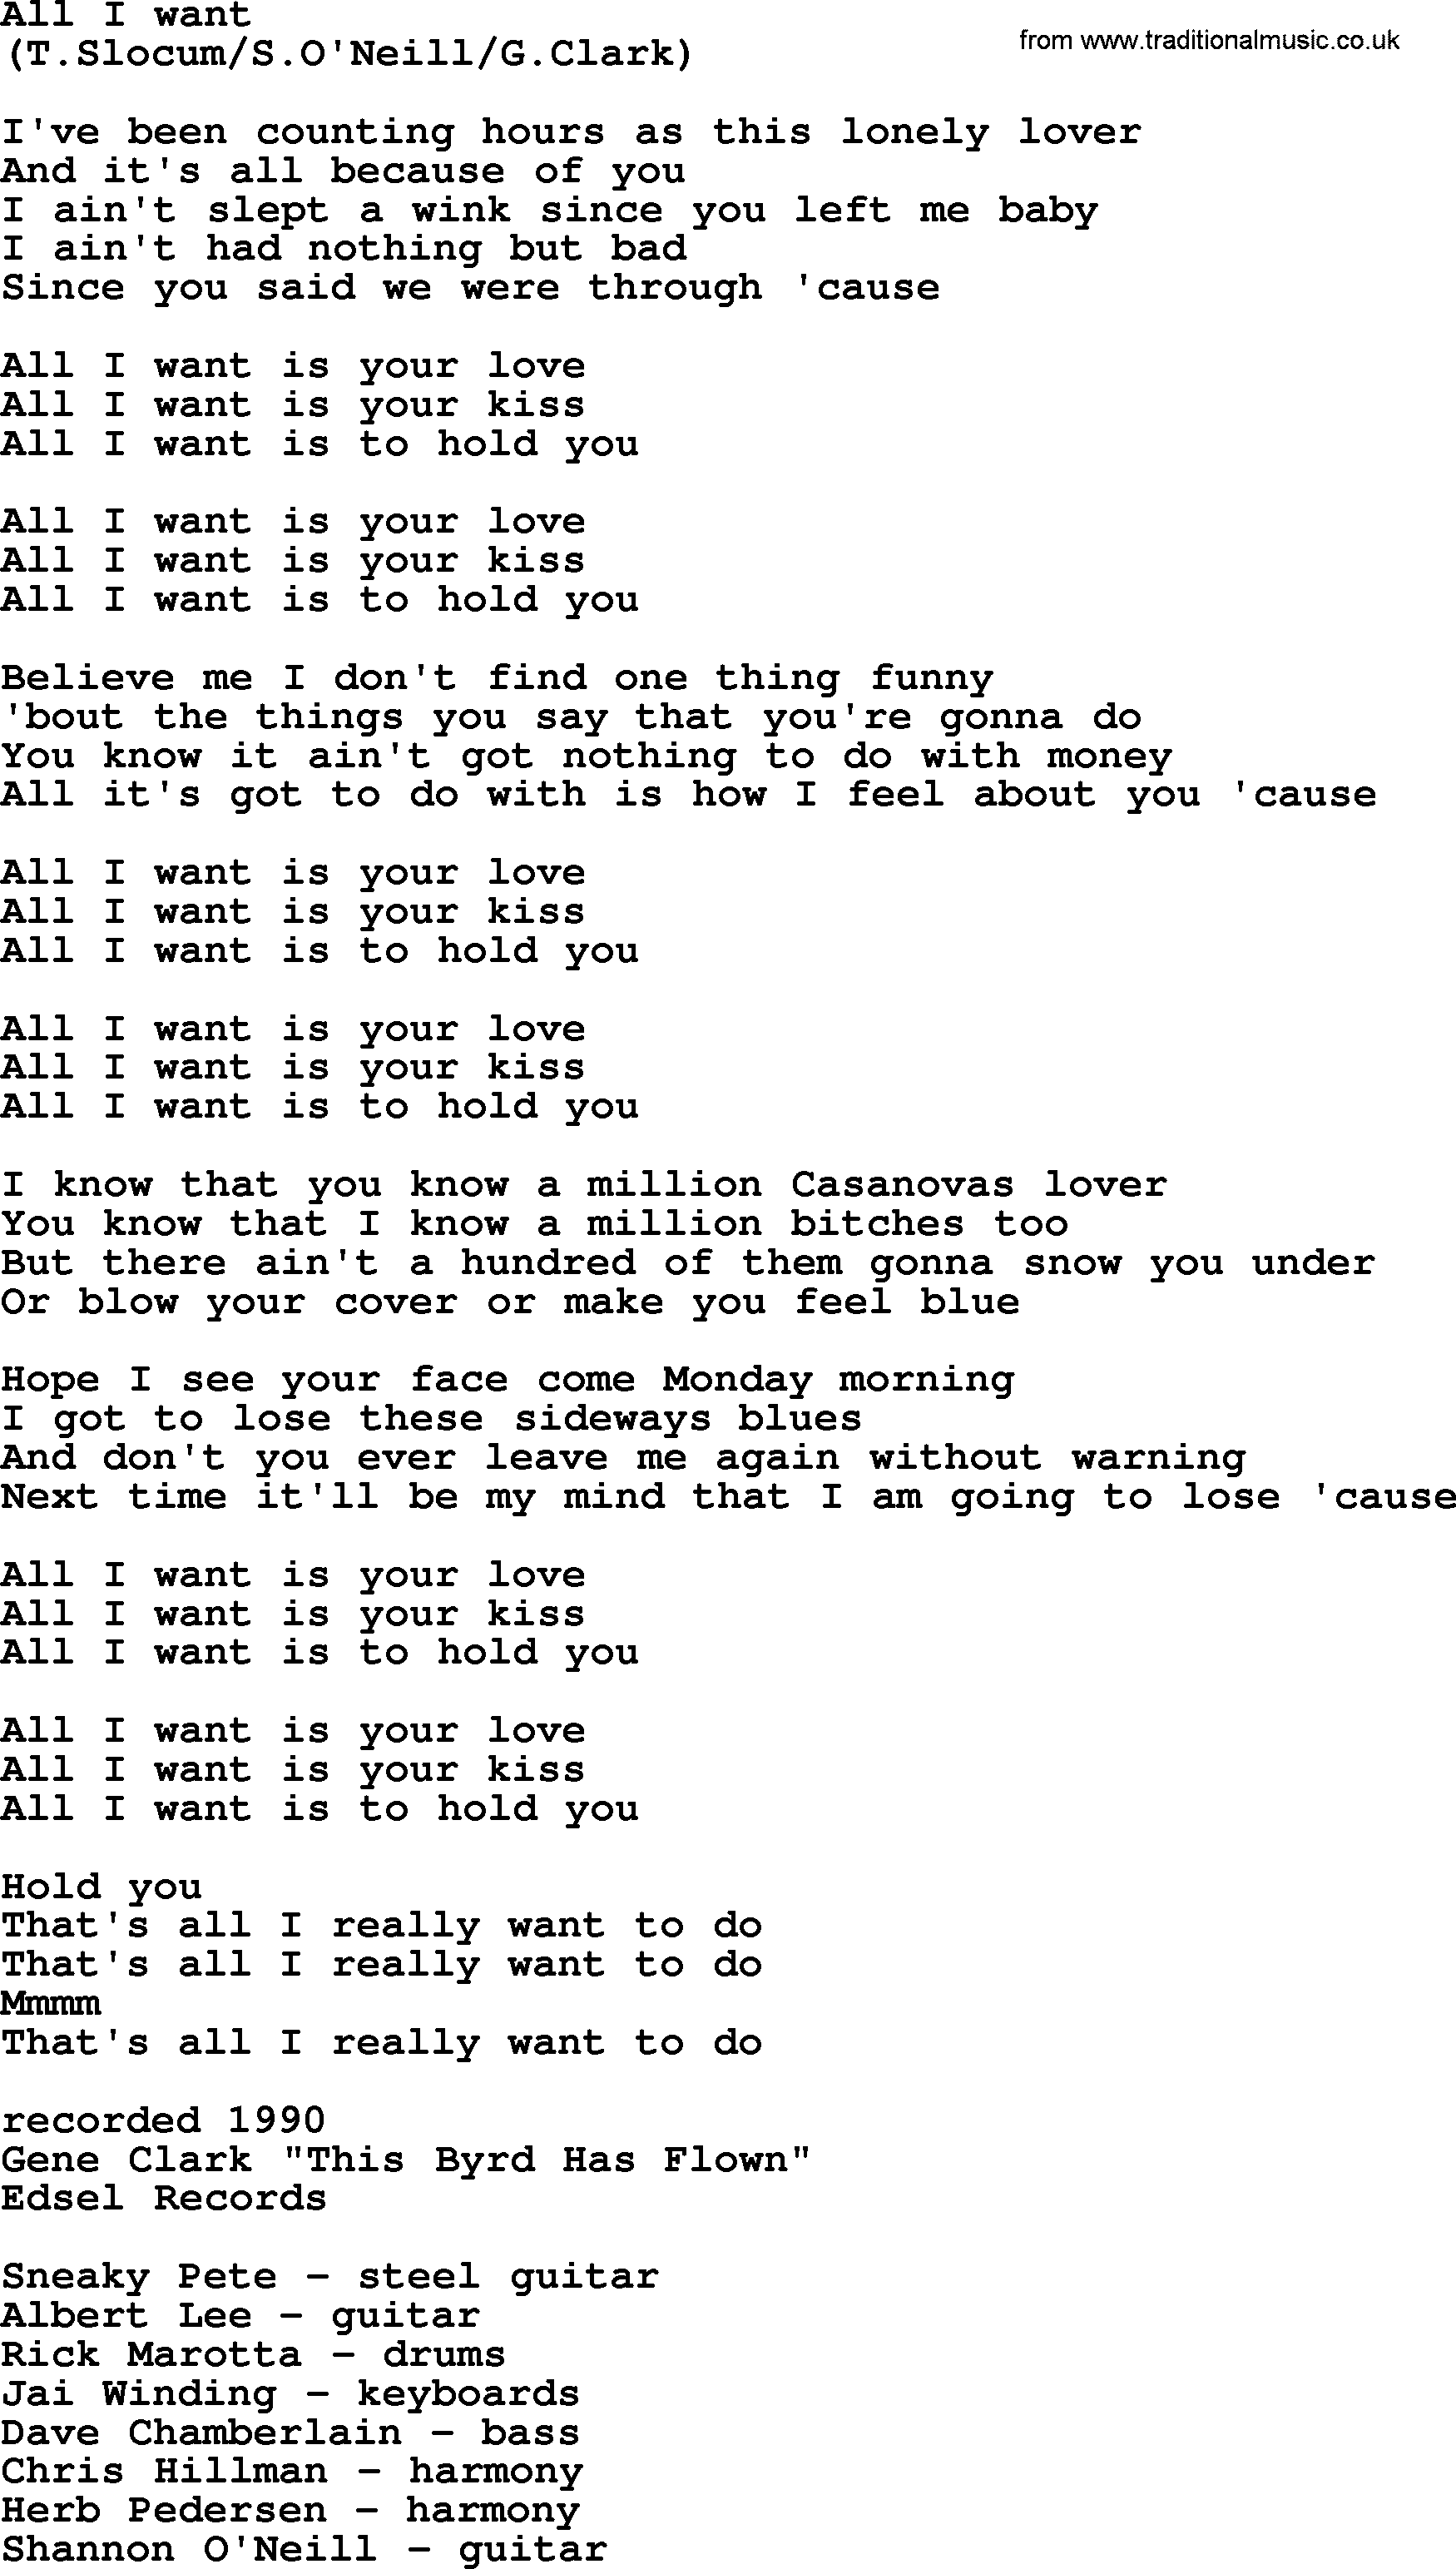 The Byrds song All I Want, lyrics